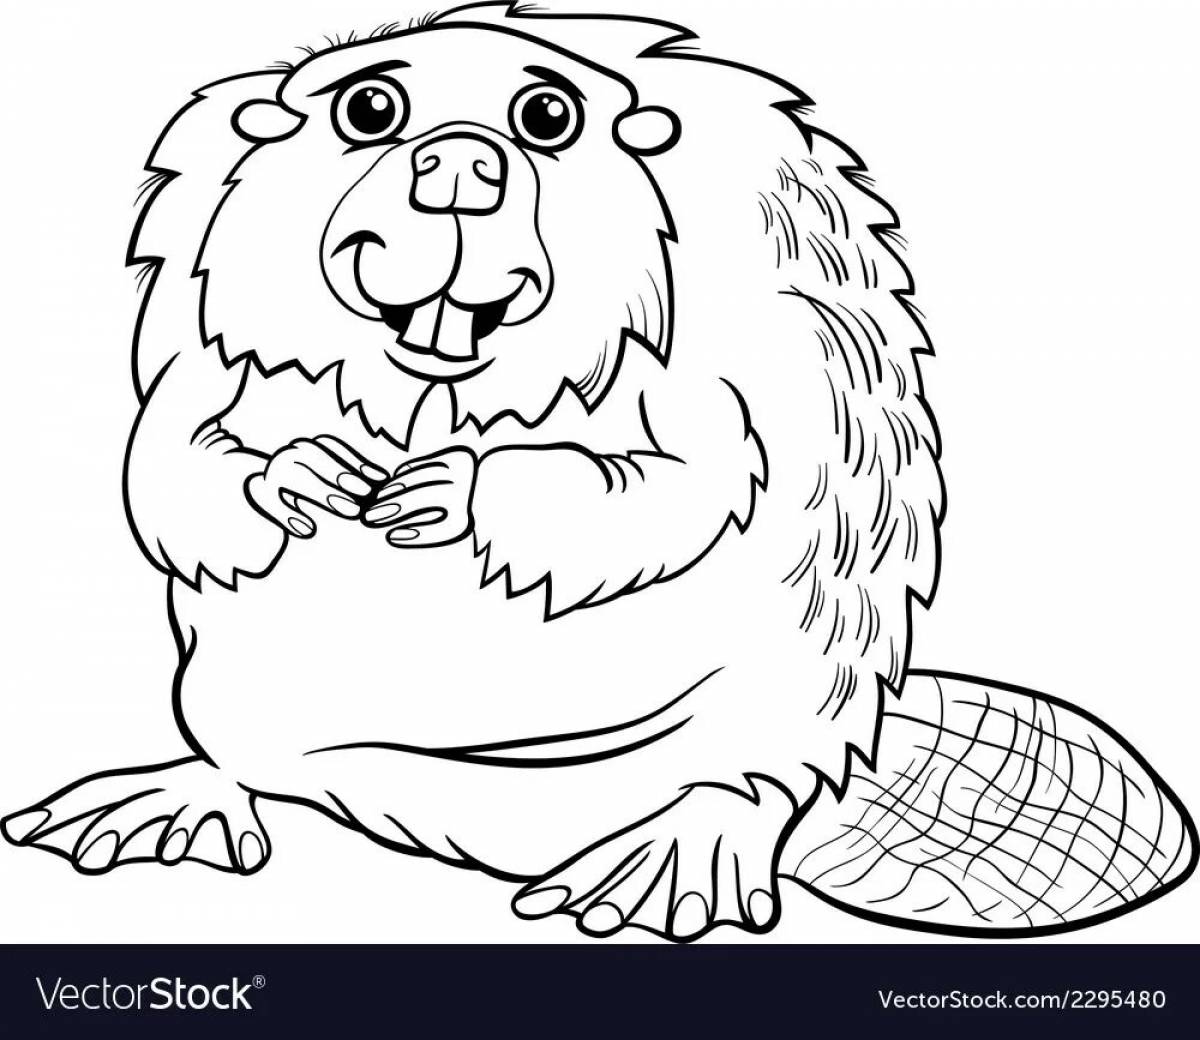 Beaver creative coloring